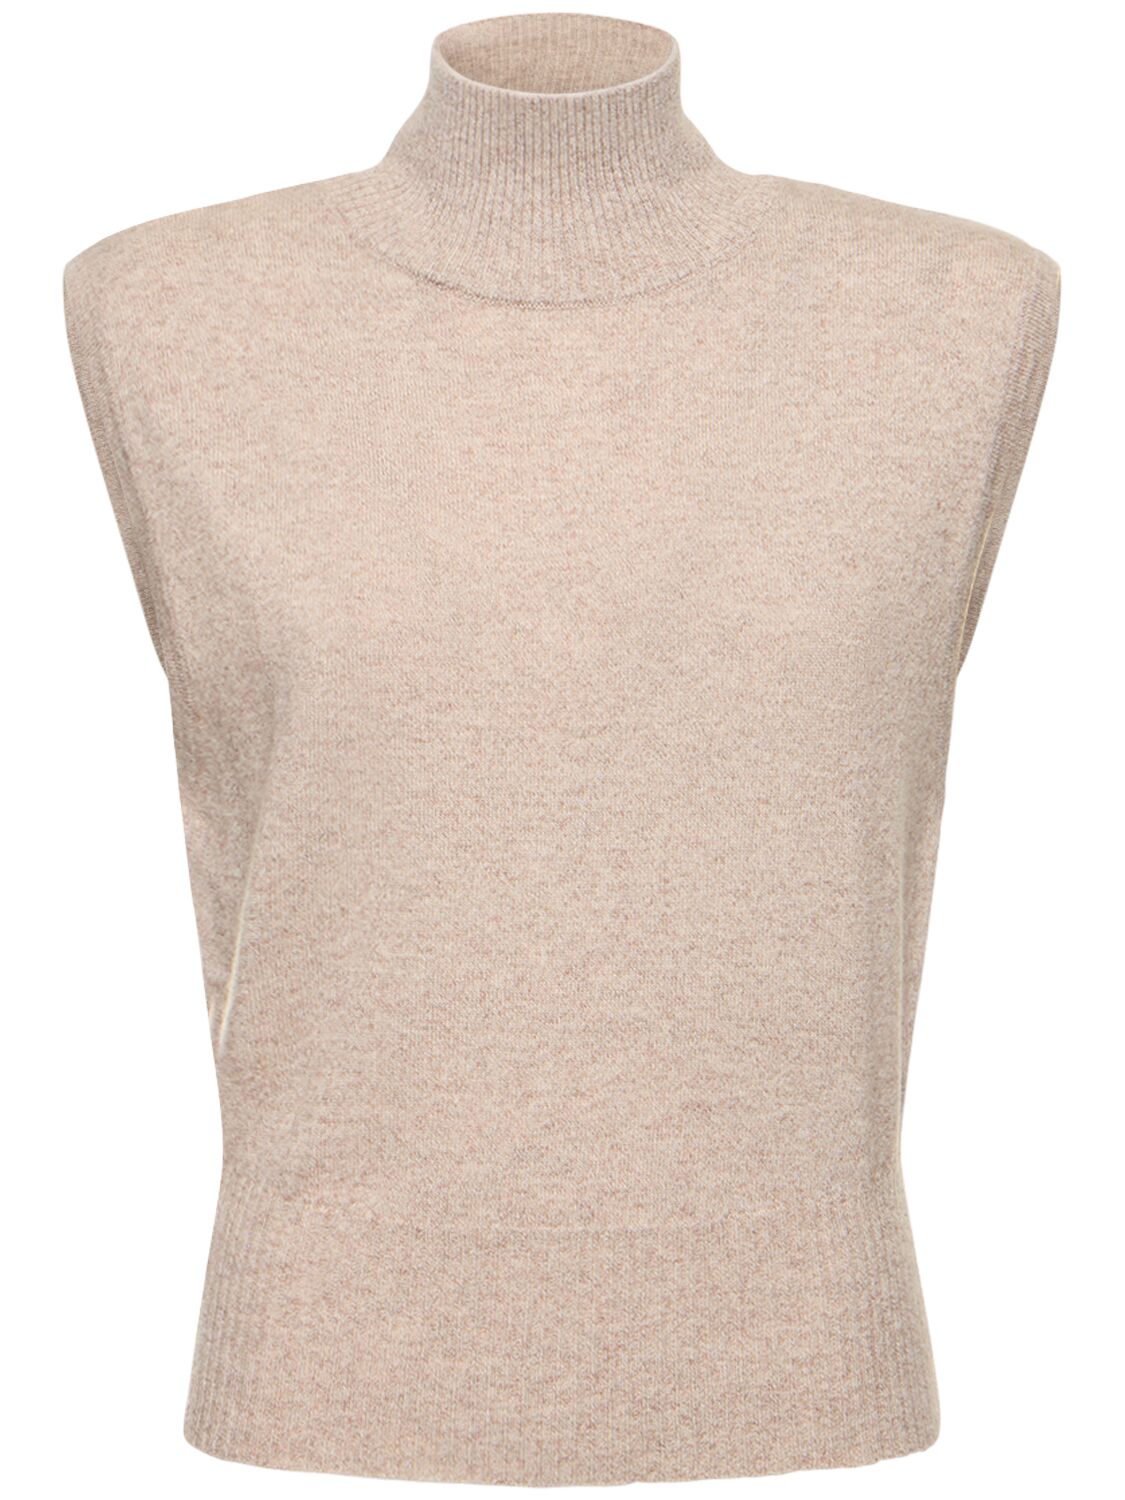 Image of Arco Sleeveless Cashmere Sweater